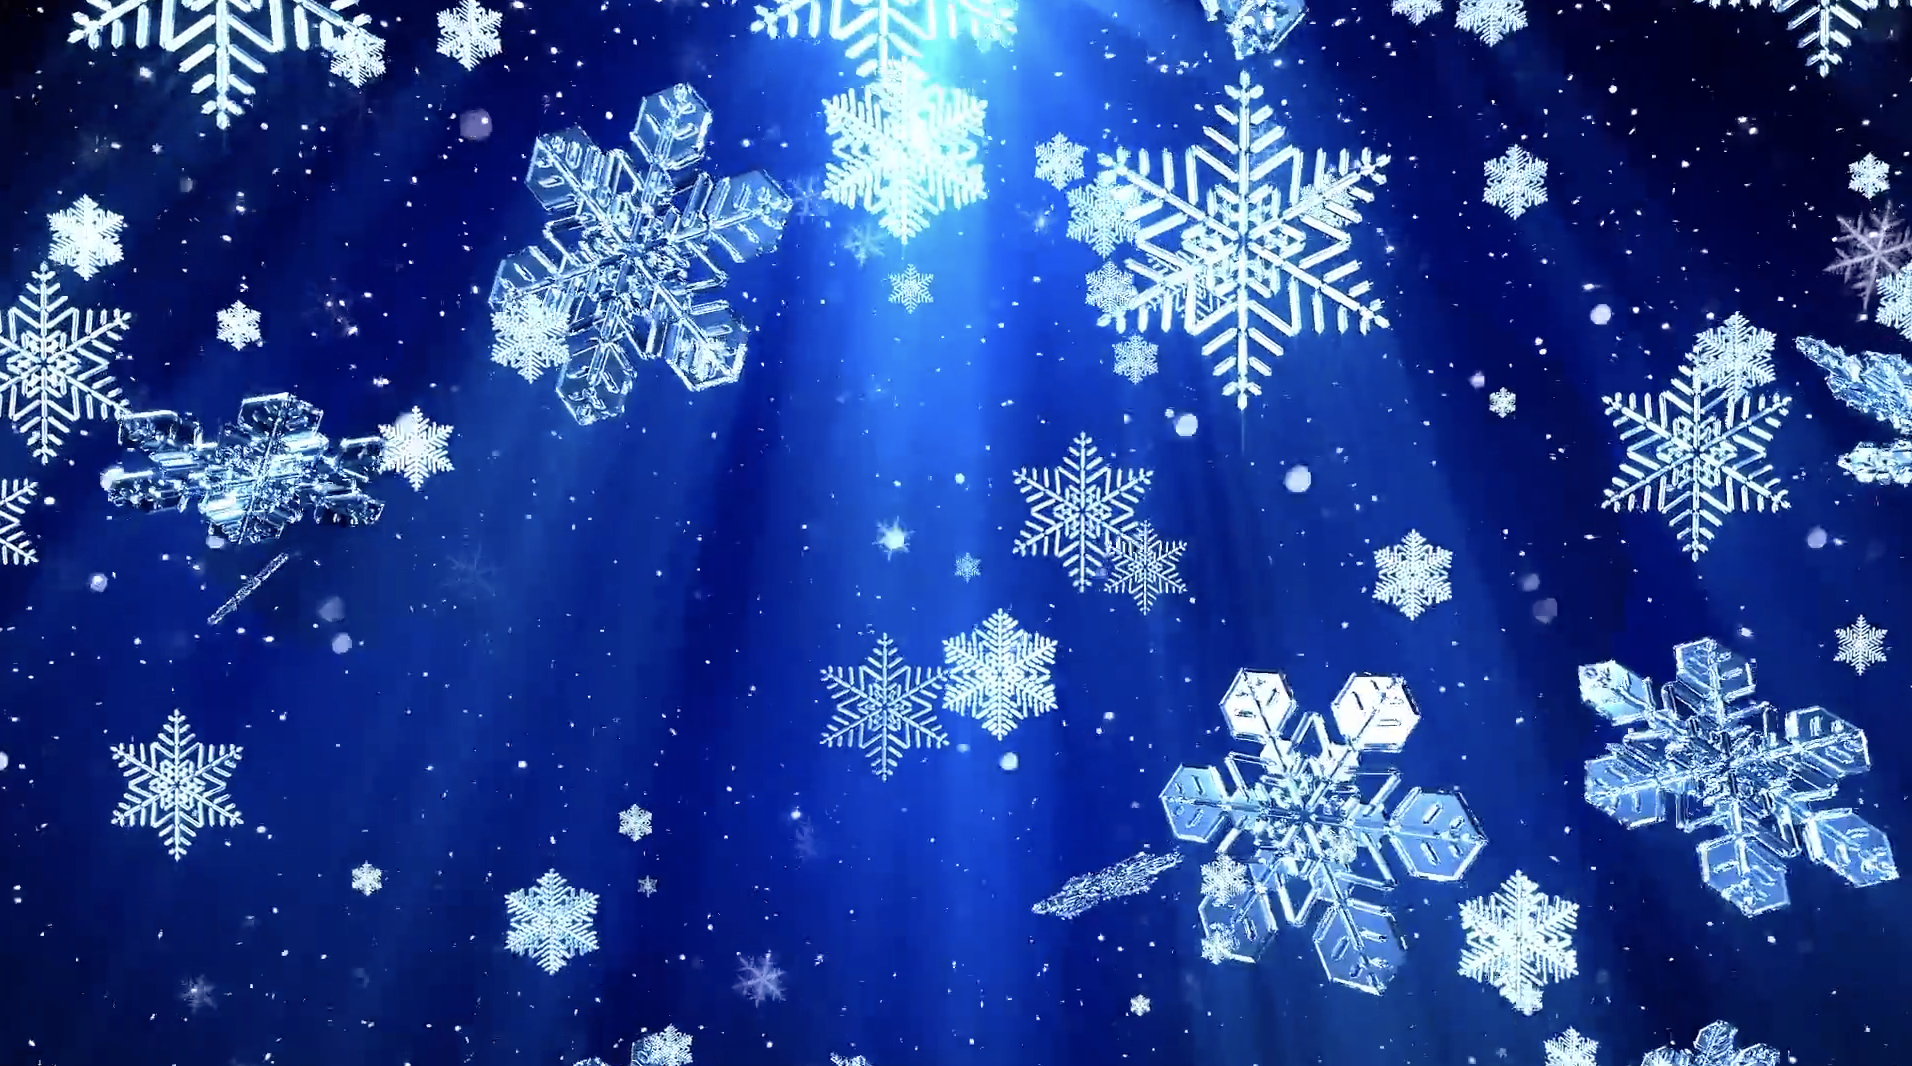 Snowflake Video Image